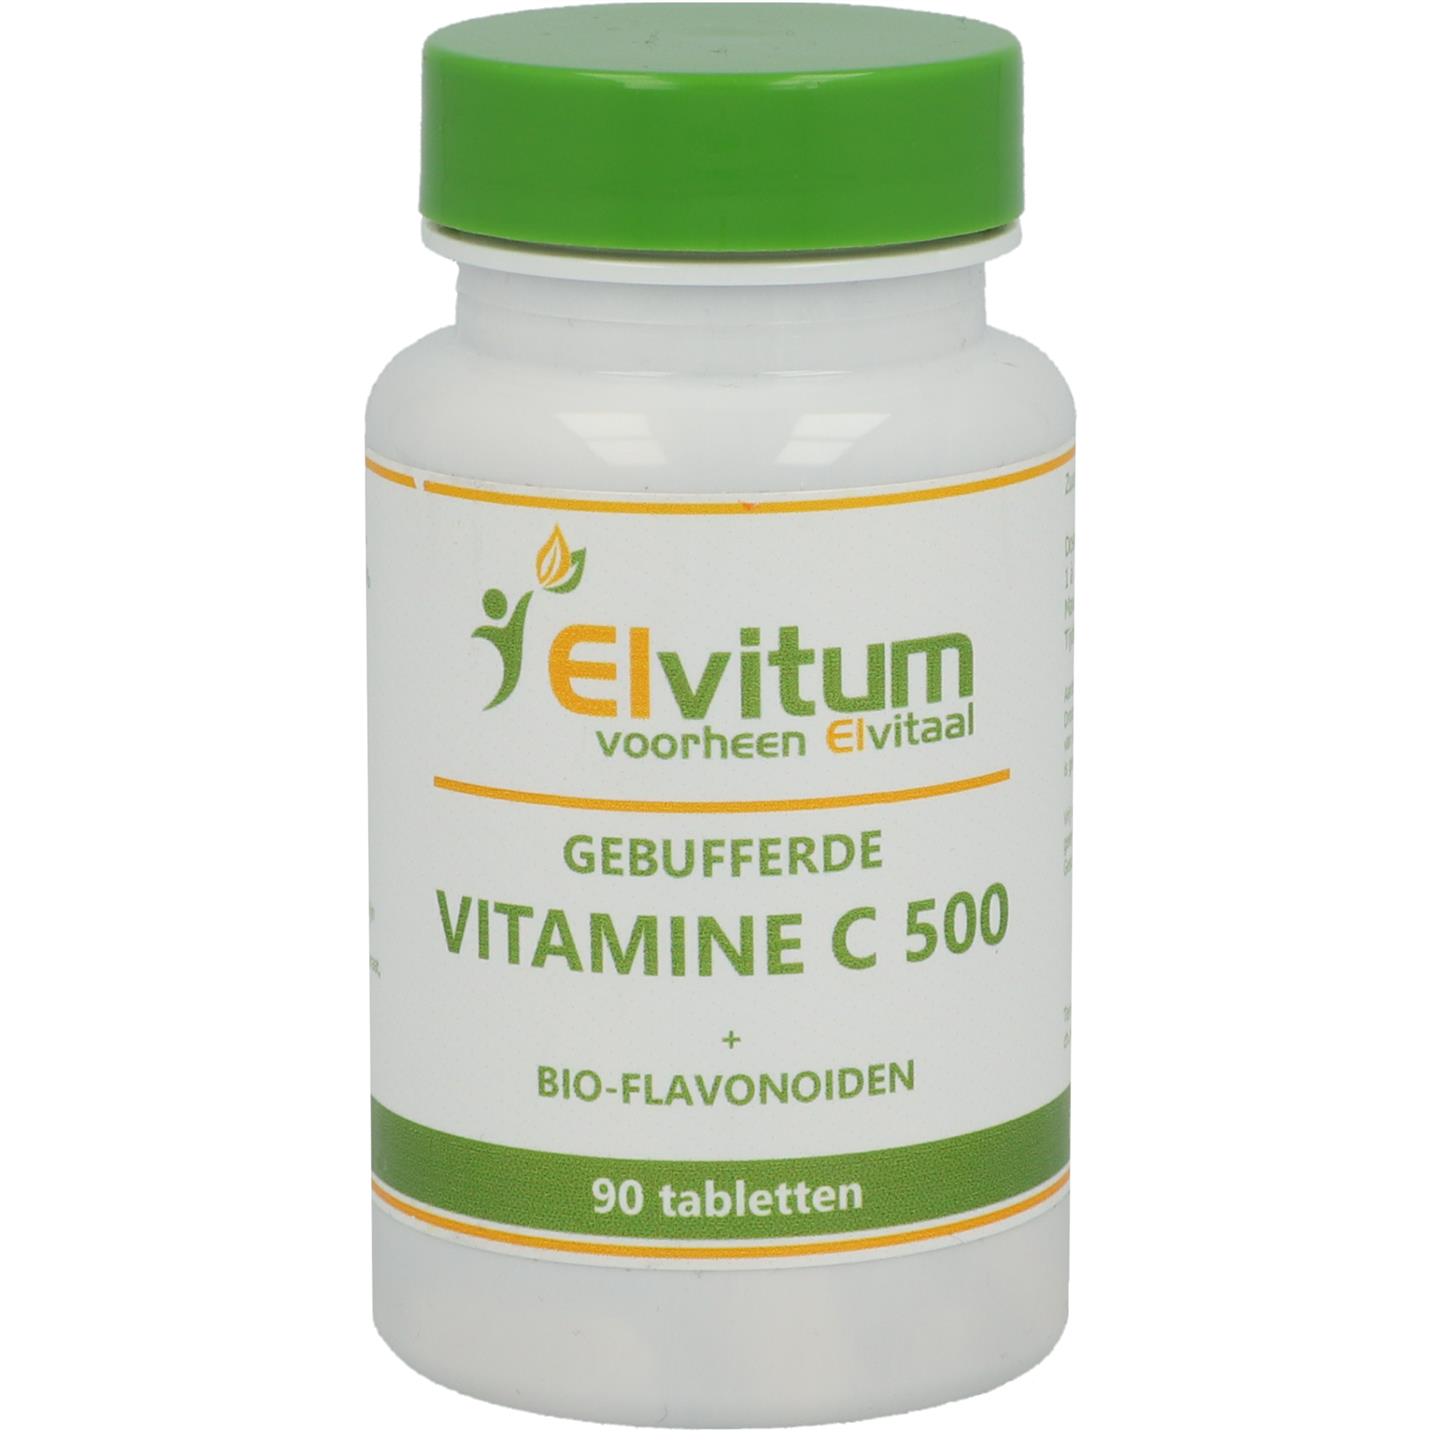 Gebufferde Vitamine C 500 + Bio-flavonoden